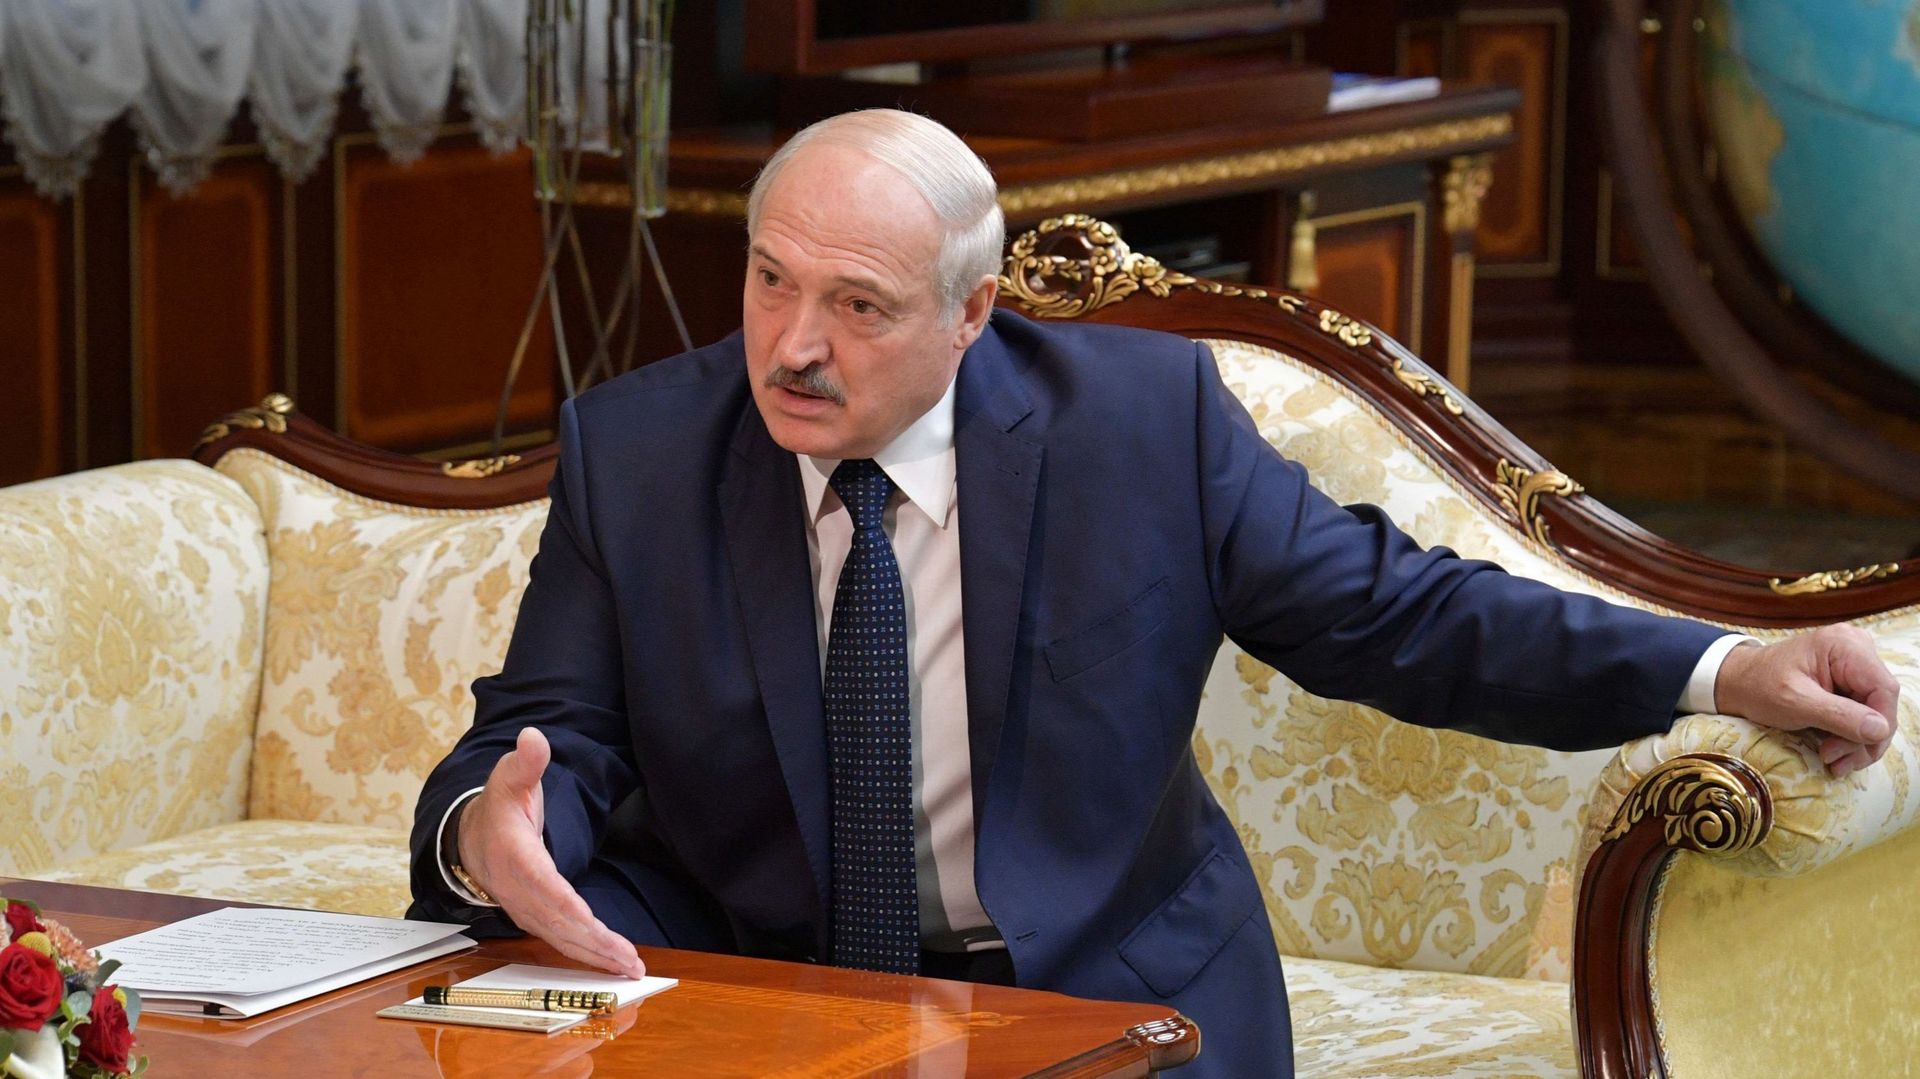 "Si la Biélorussie tombe, la prochaine sera la Russie", affirme Loukachenko